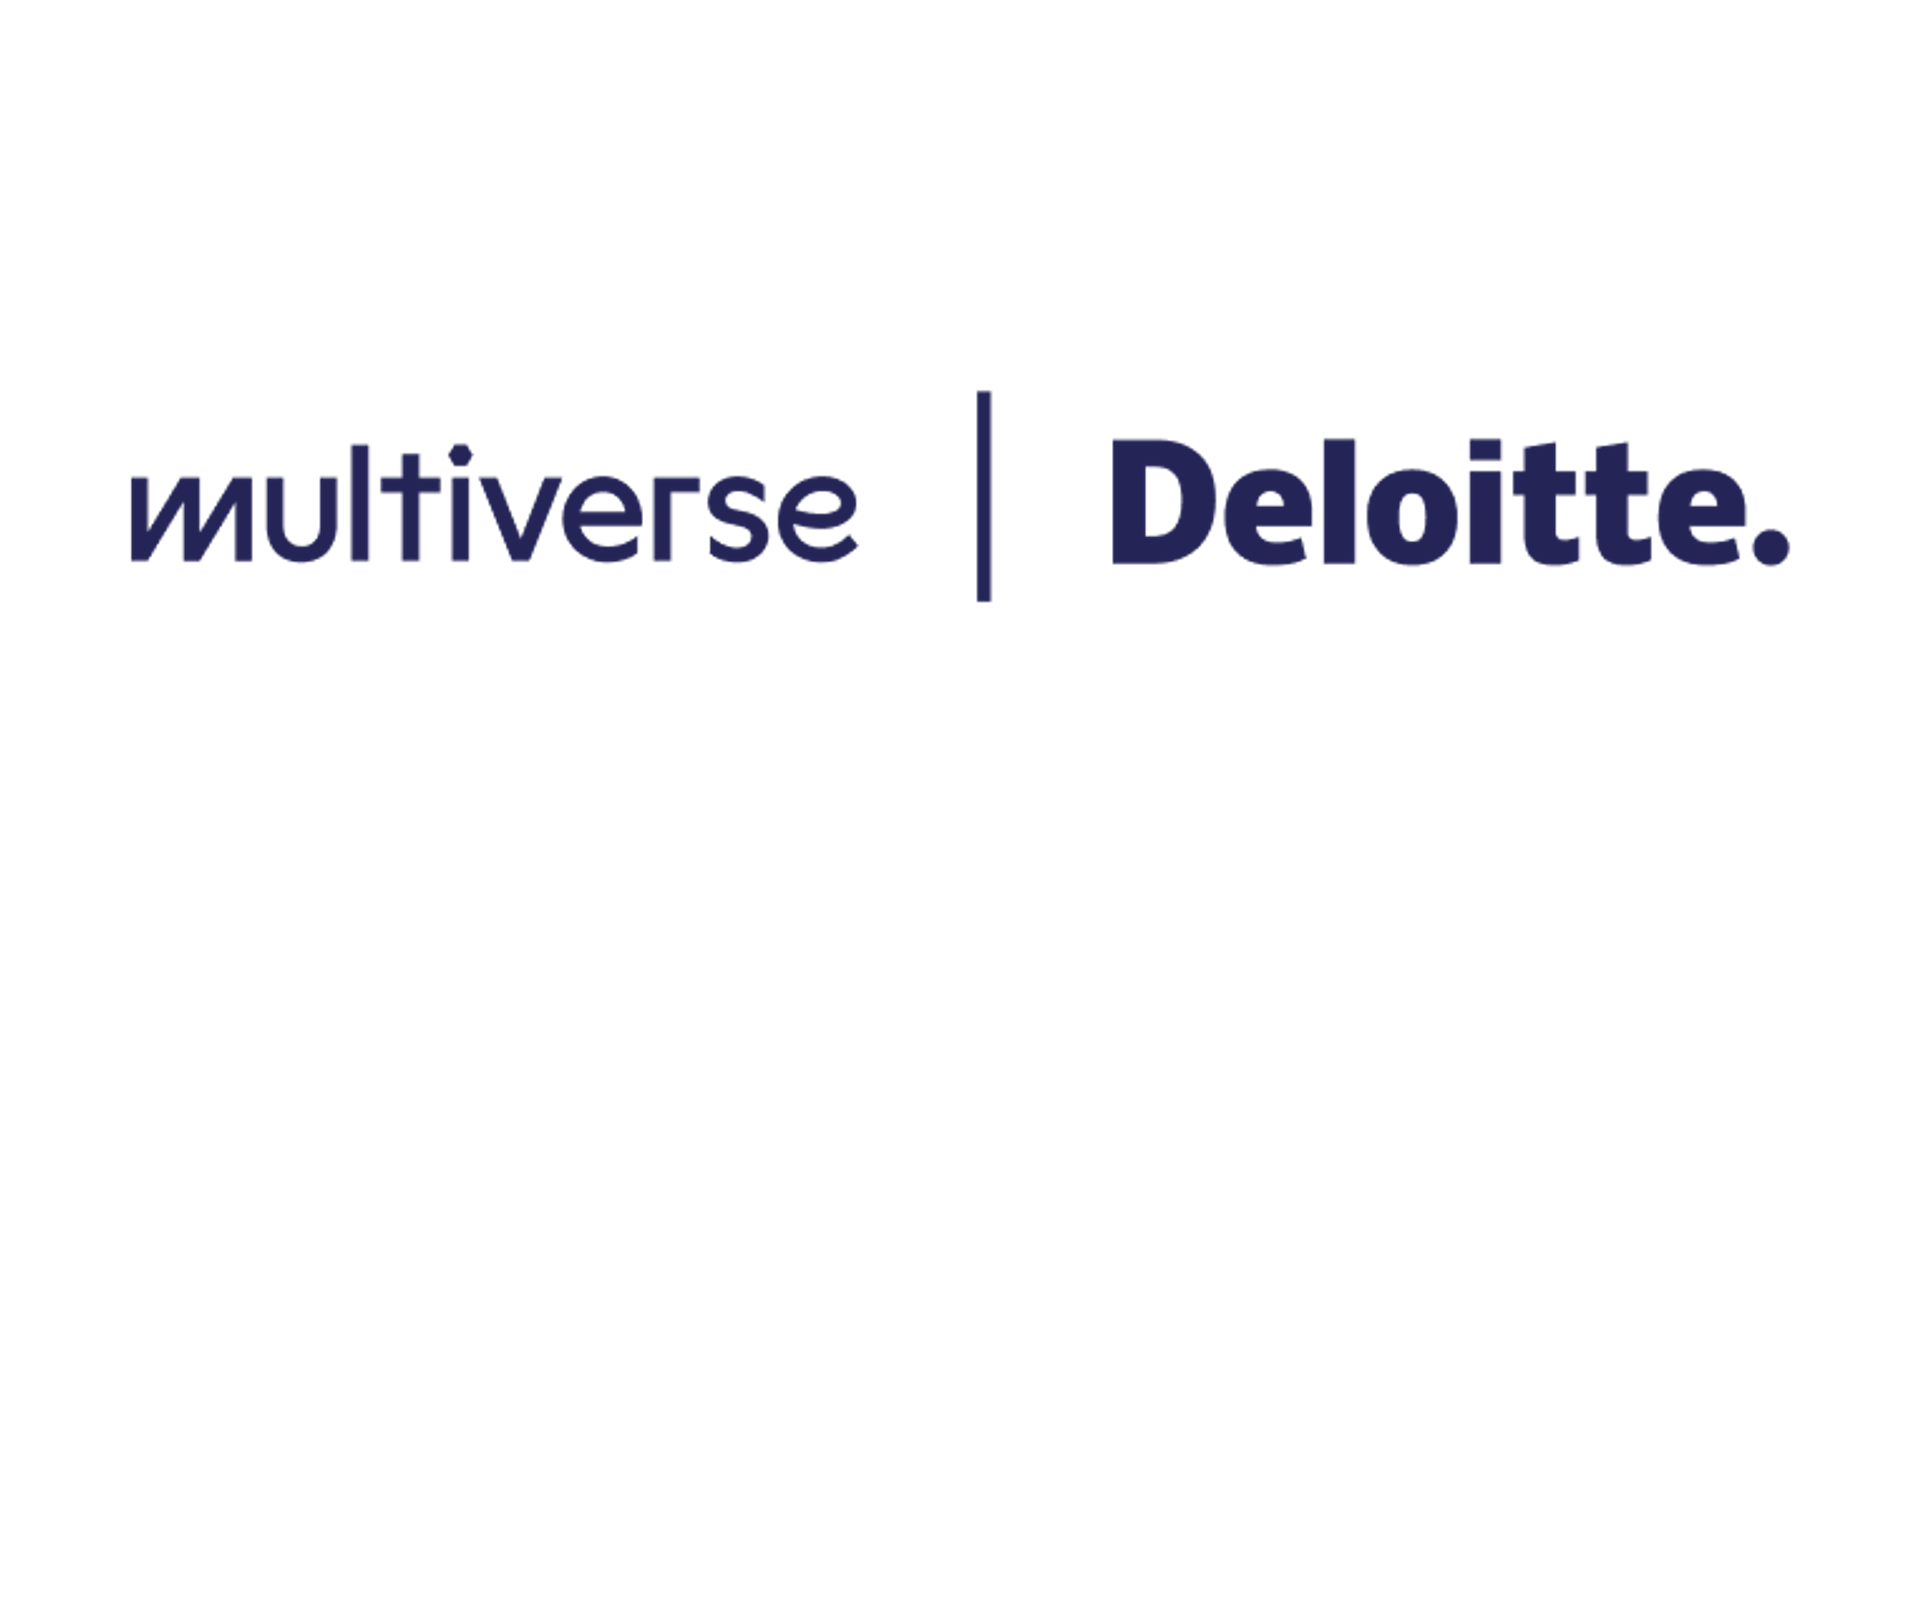 Multiverse and deloitte